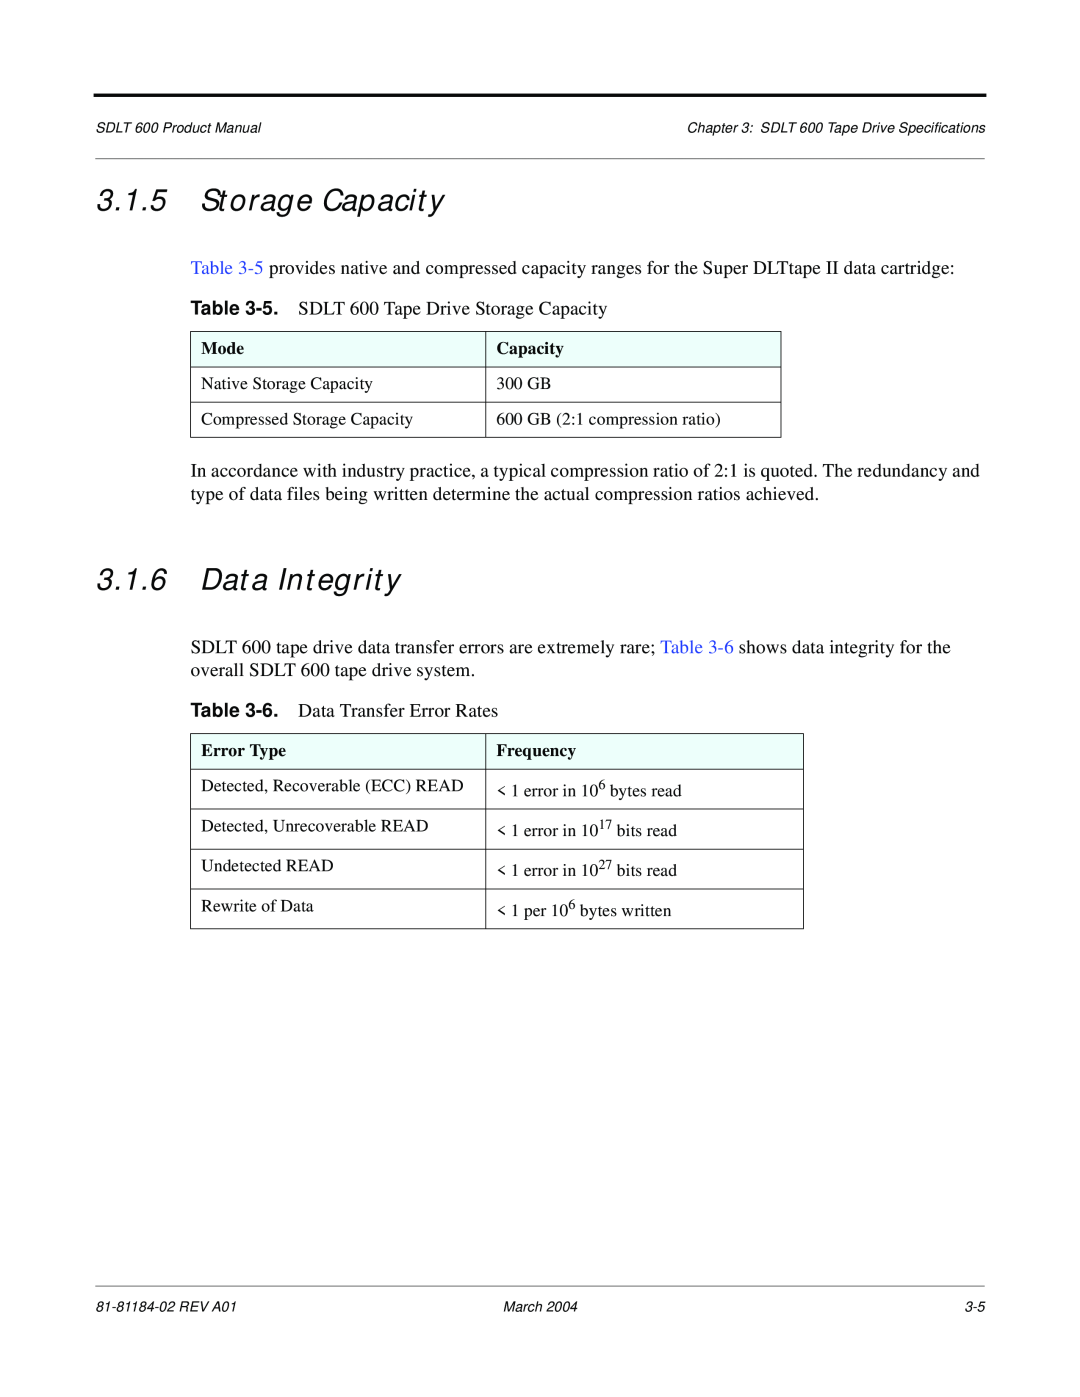 Tandberg Data 600 manual Storage Capacity, Data Integrity 